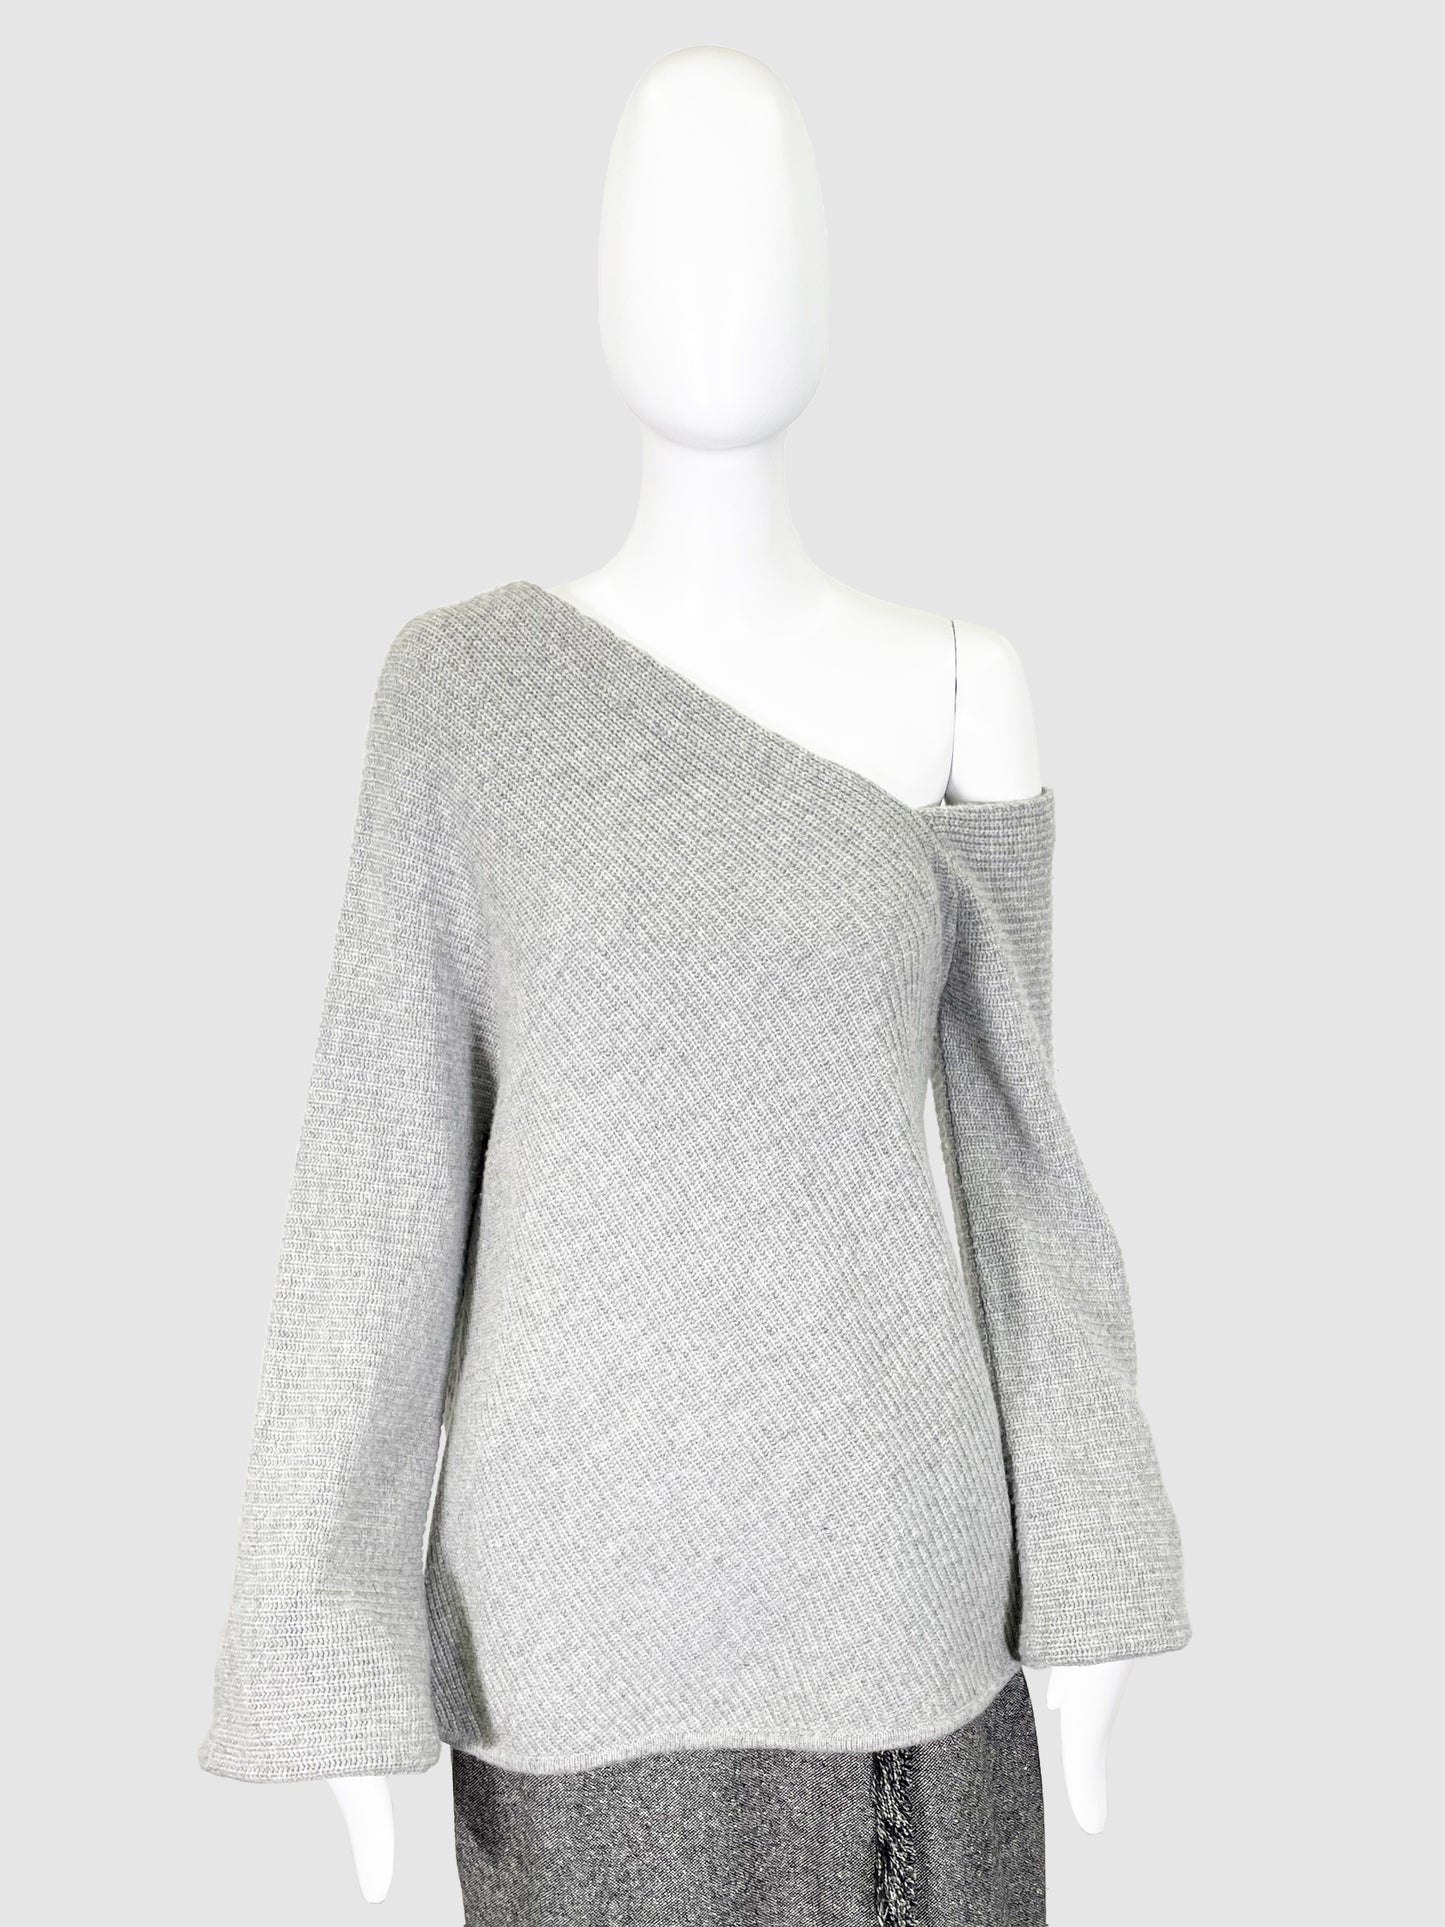 A.L.C. Off the Shoulder Sweater - Size M